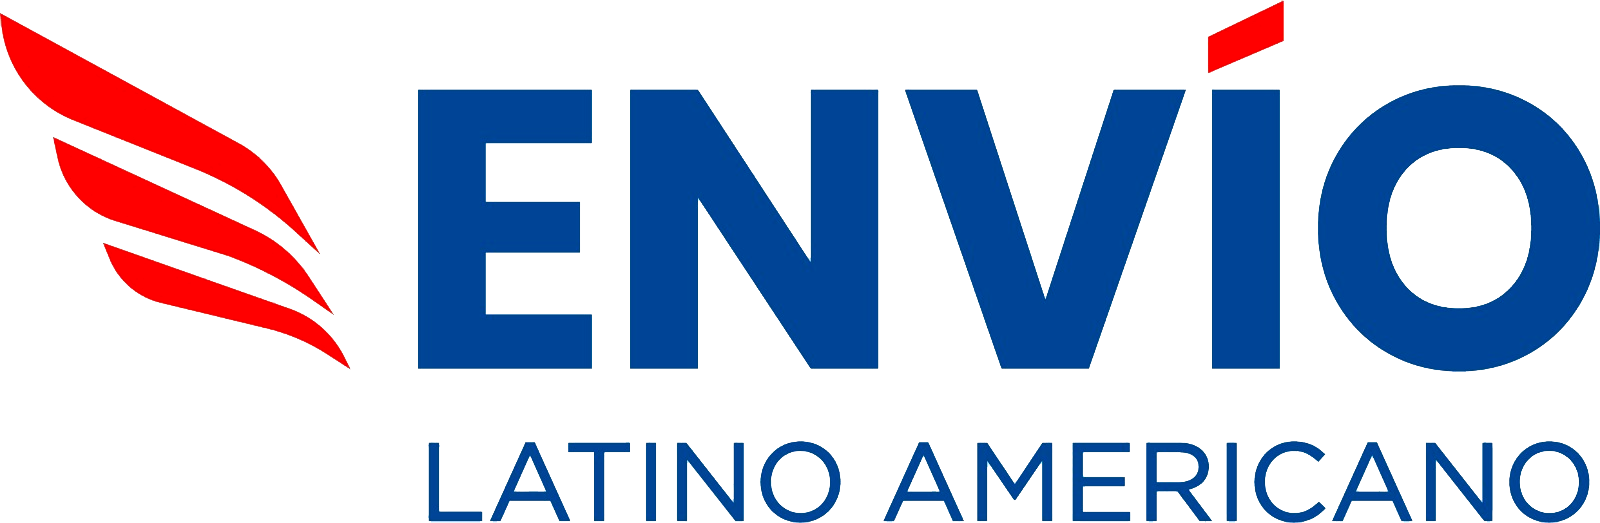 Envio Latino Americano, the Latin American Shipping Company